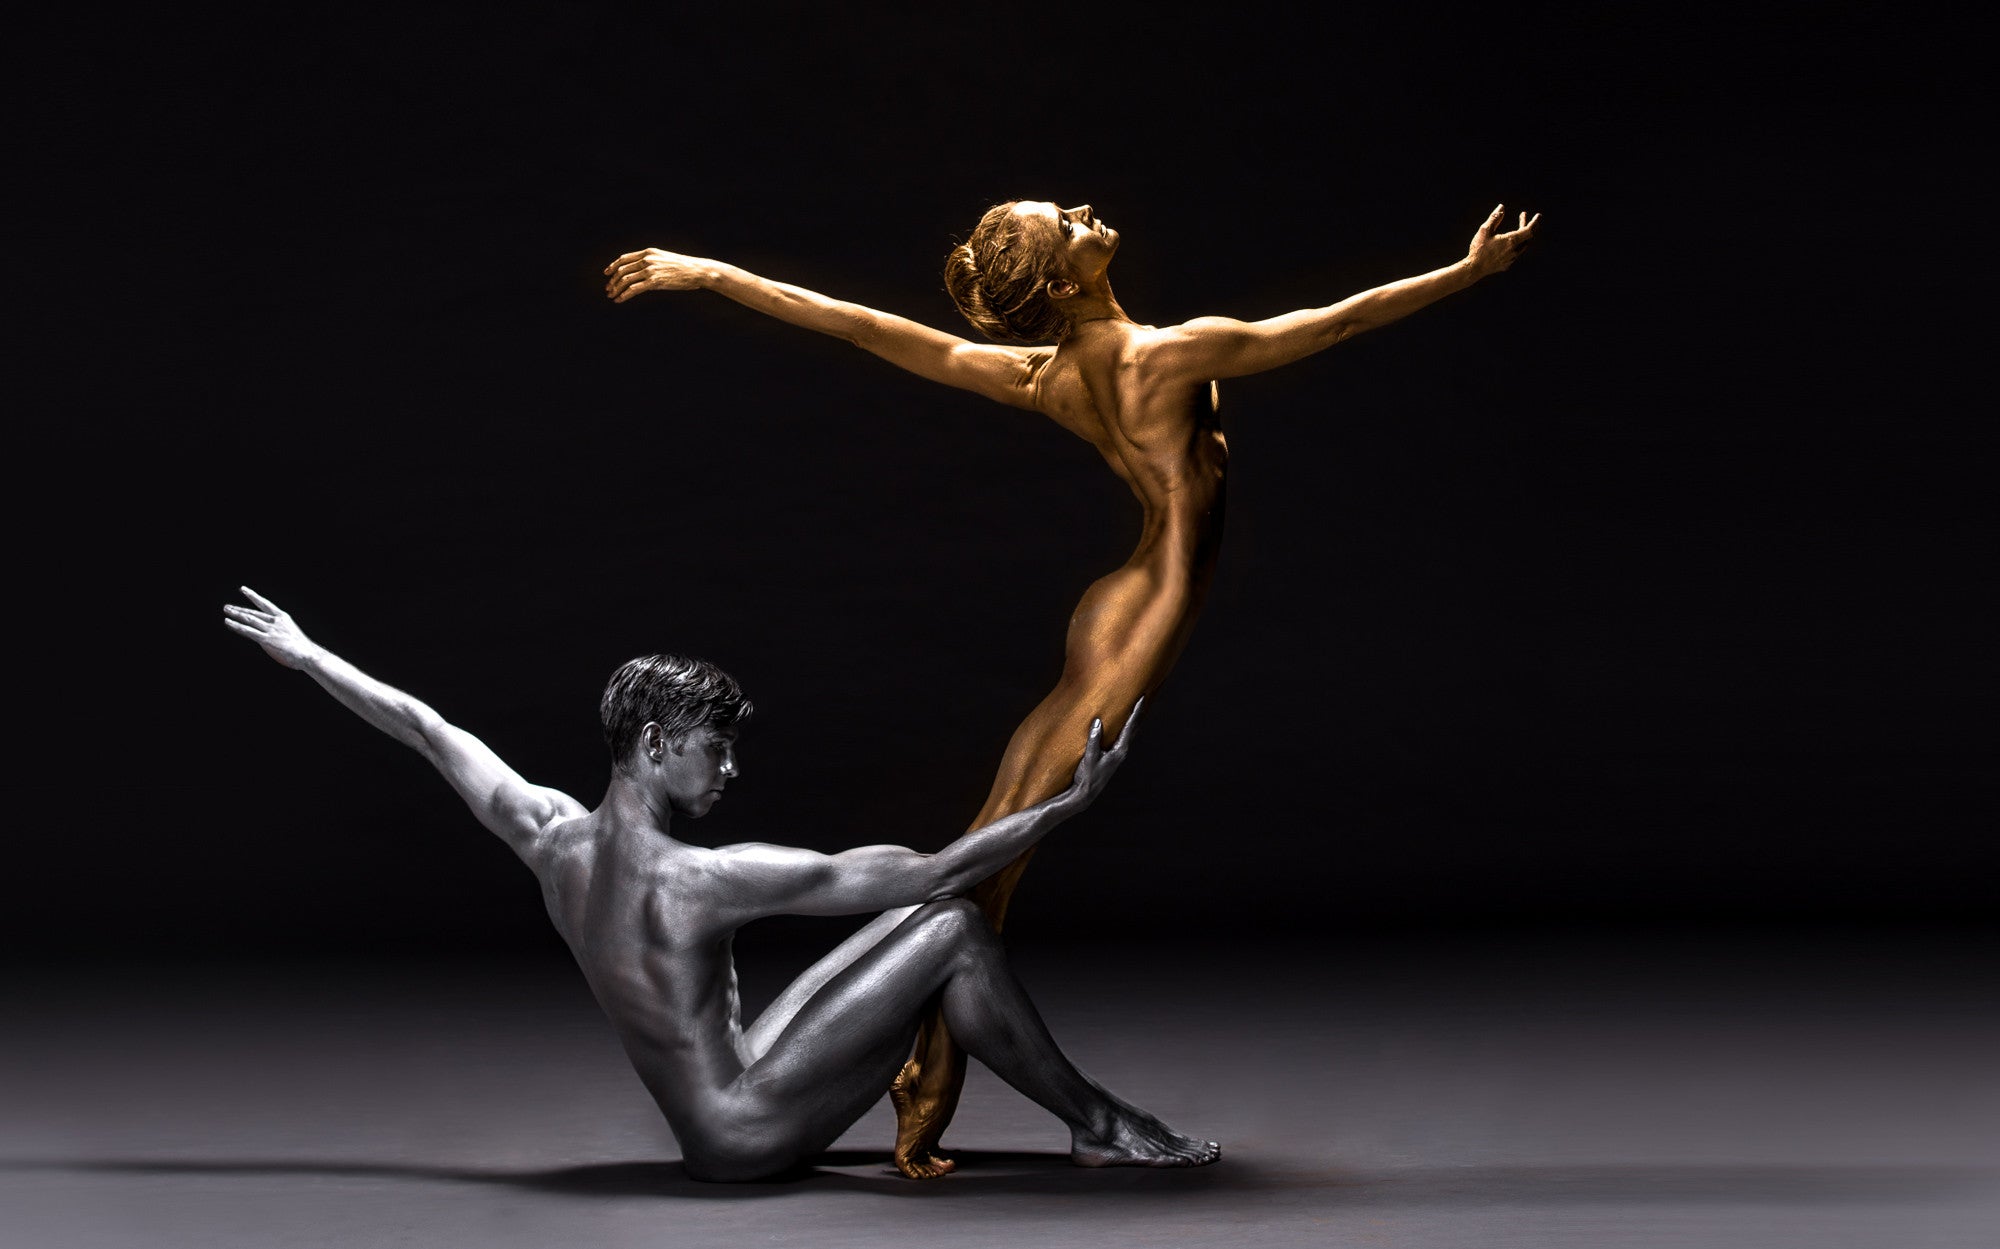 Art Dance Photography Prints - Purchase Online the artwork: Mehron Figures - silver boy and gold girl by Francisco Estevez